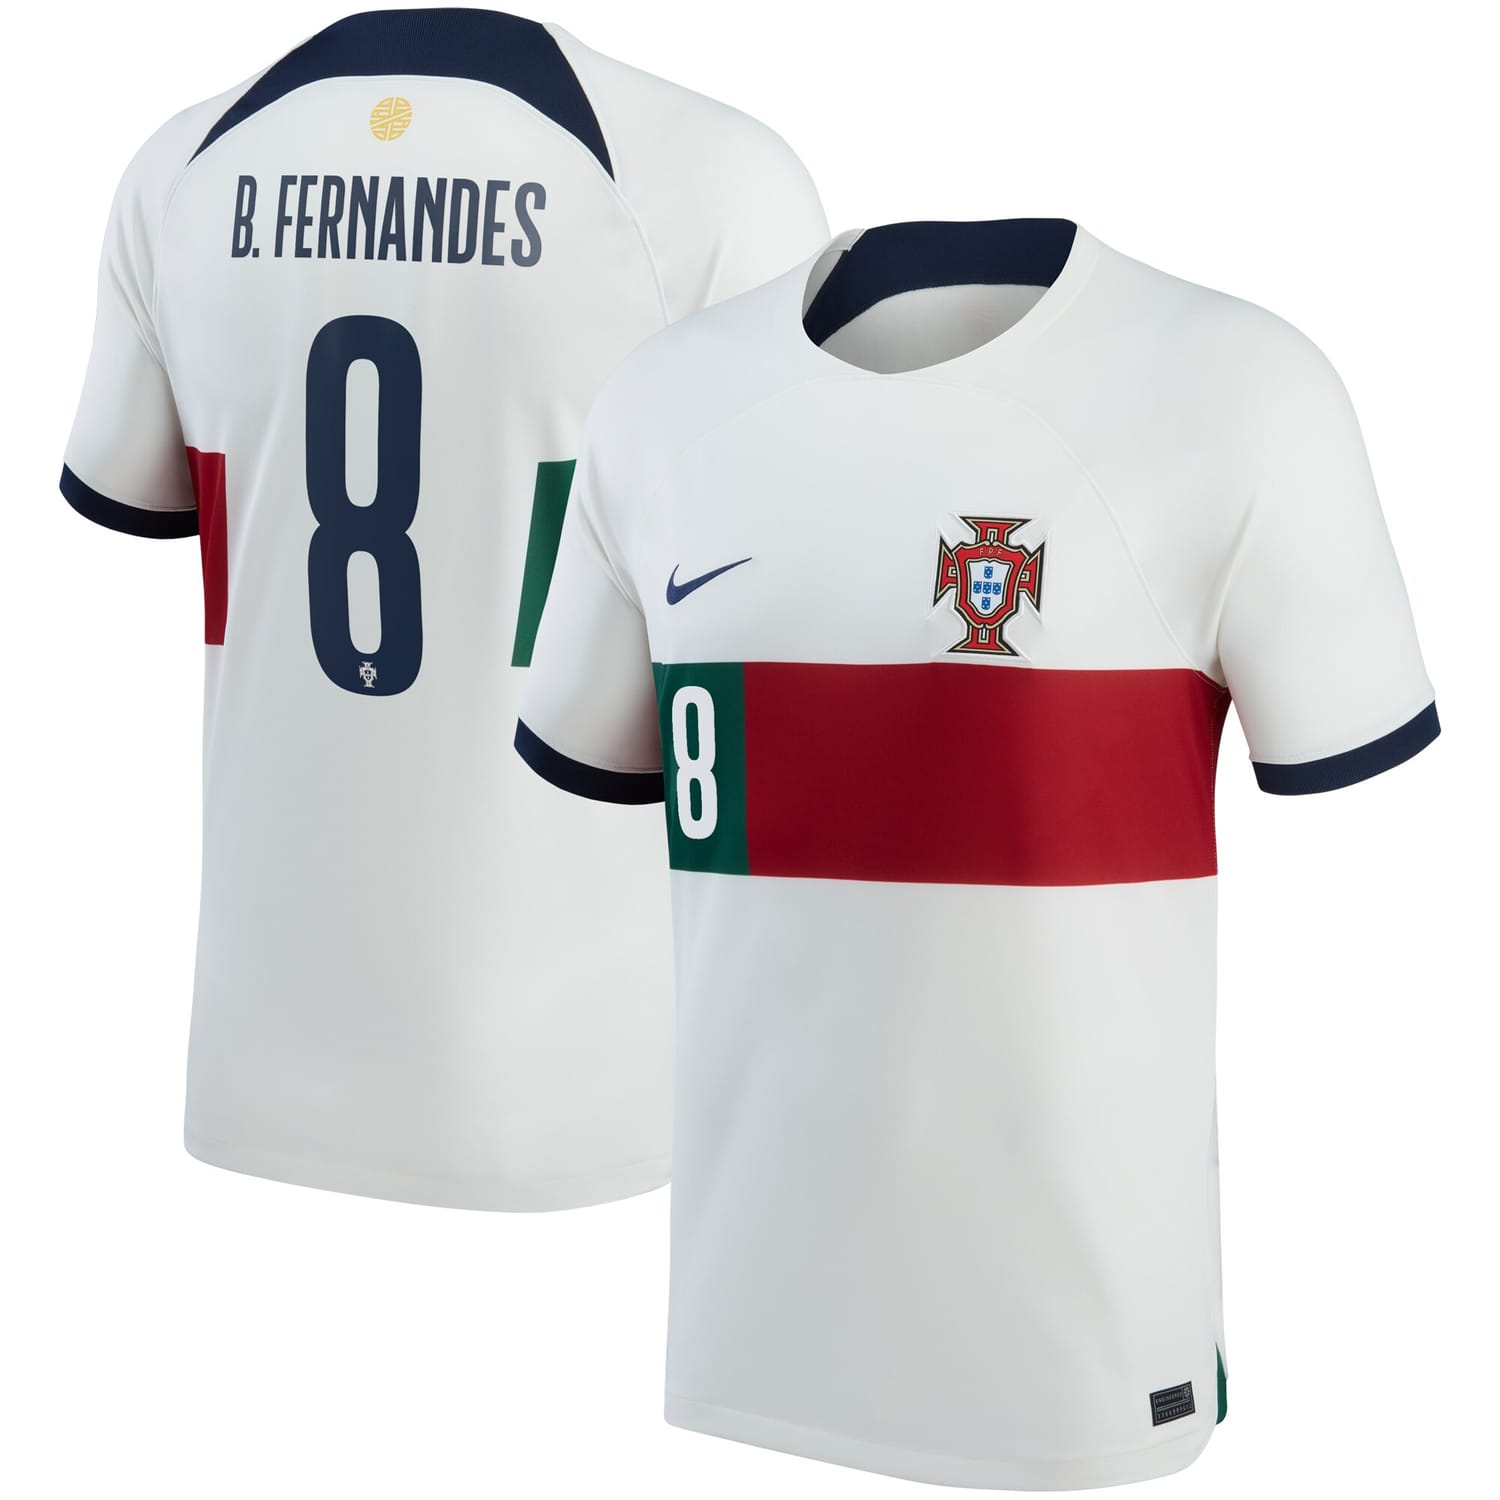 Portugal National Team Away Jersey Shirt White 2022-23 player Bruno Fernandes printing for Men